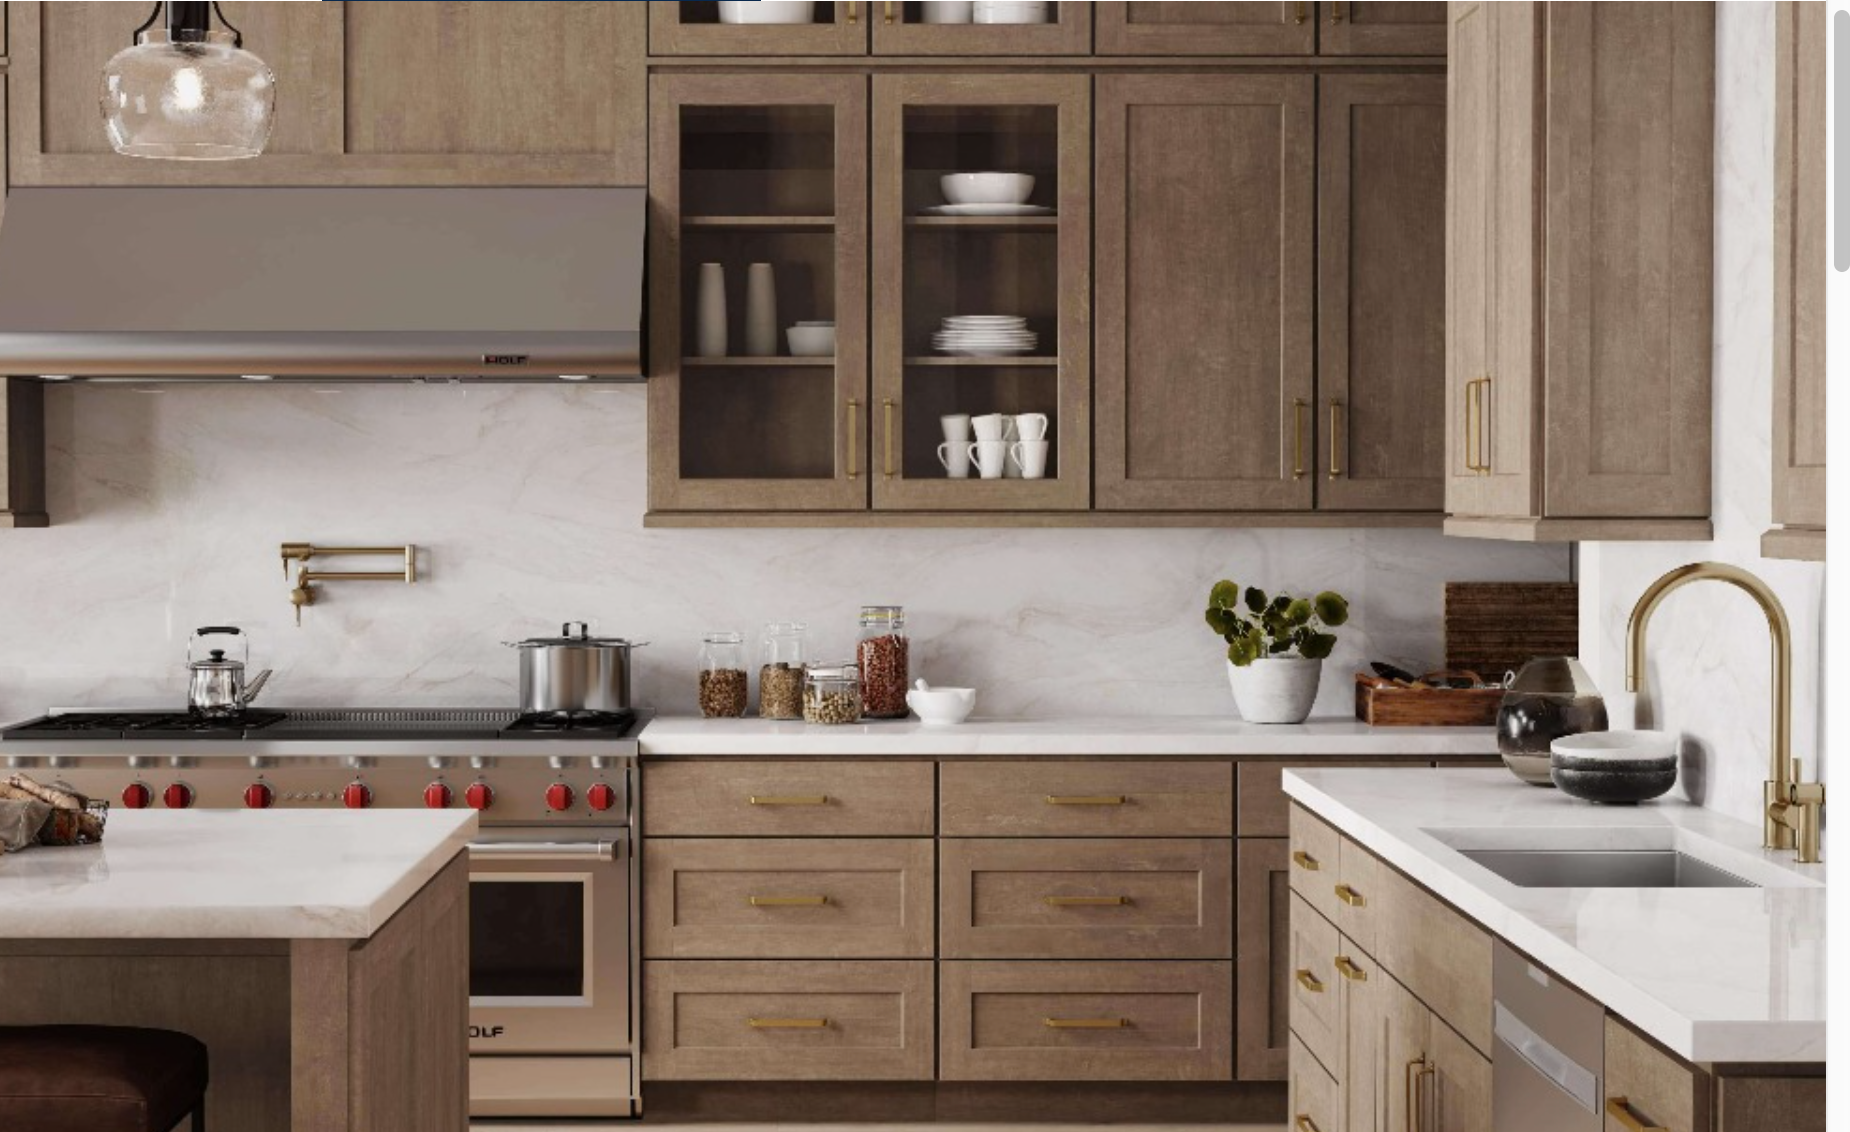 Dover Light brown kitchen cabinet renovation